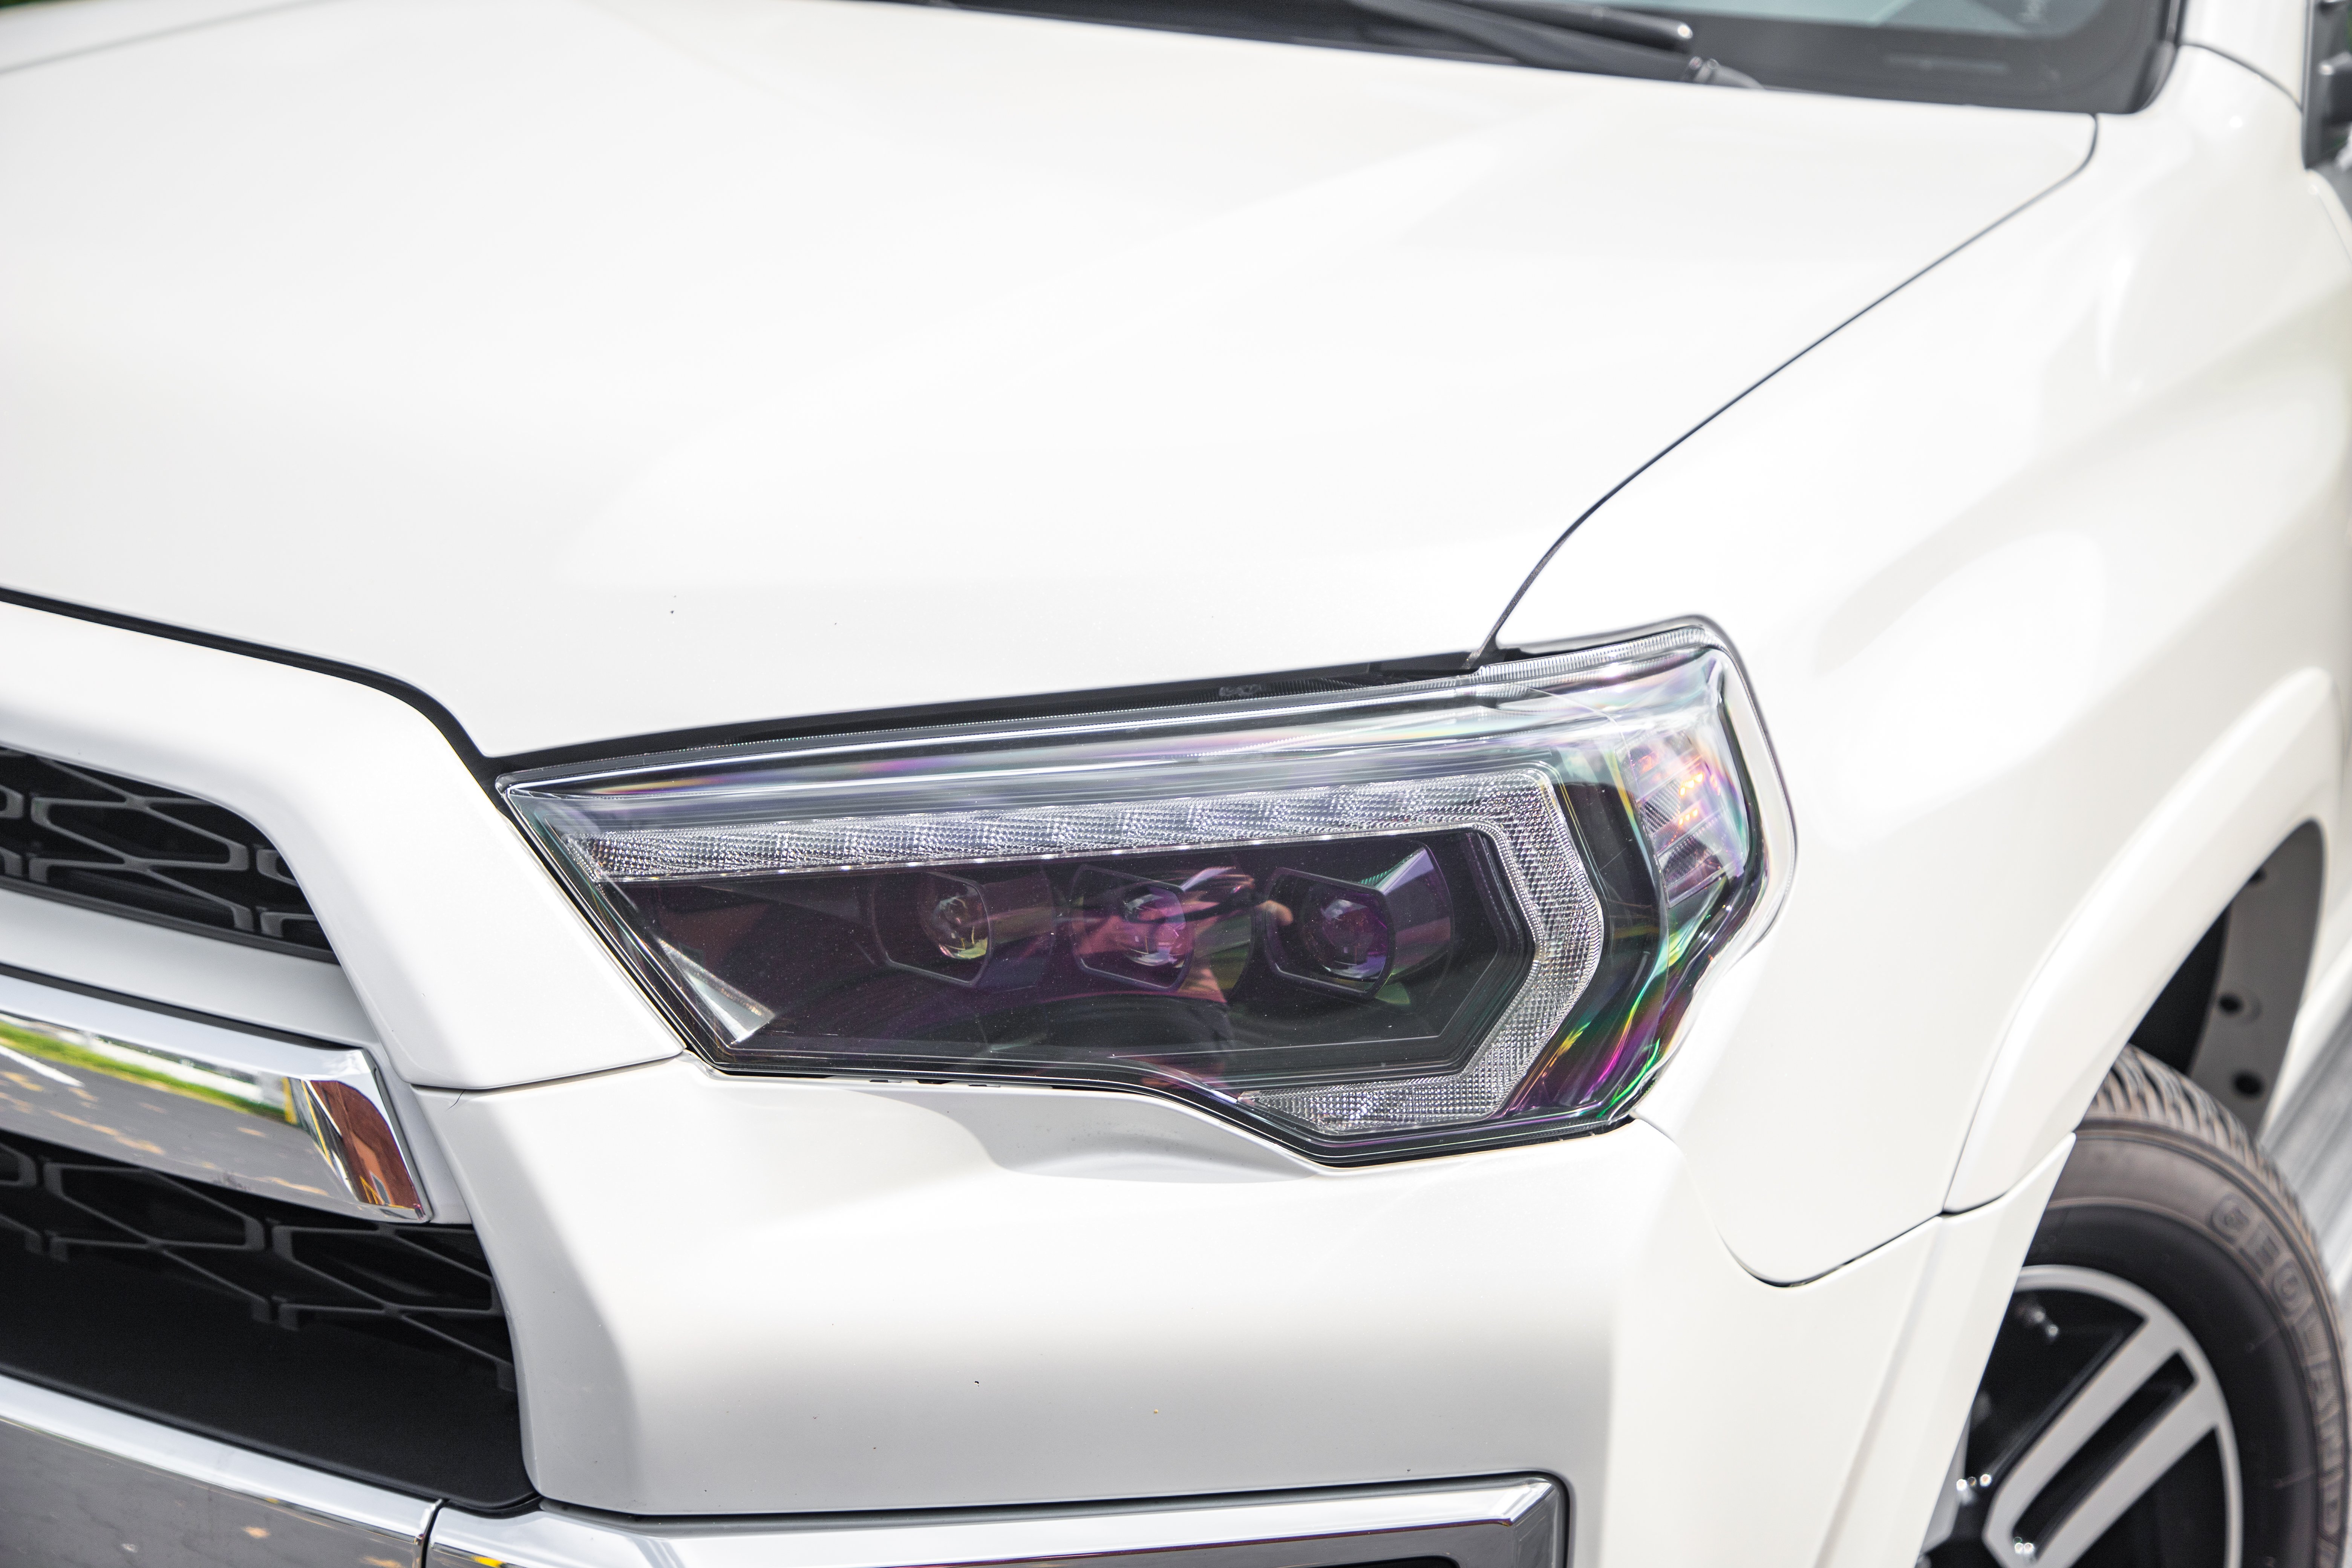 Morimoto XB LED Headlights on a Toyota Tundra.